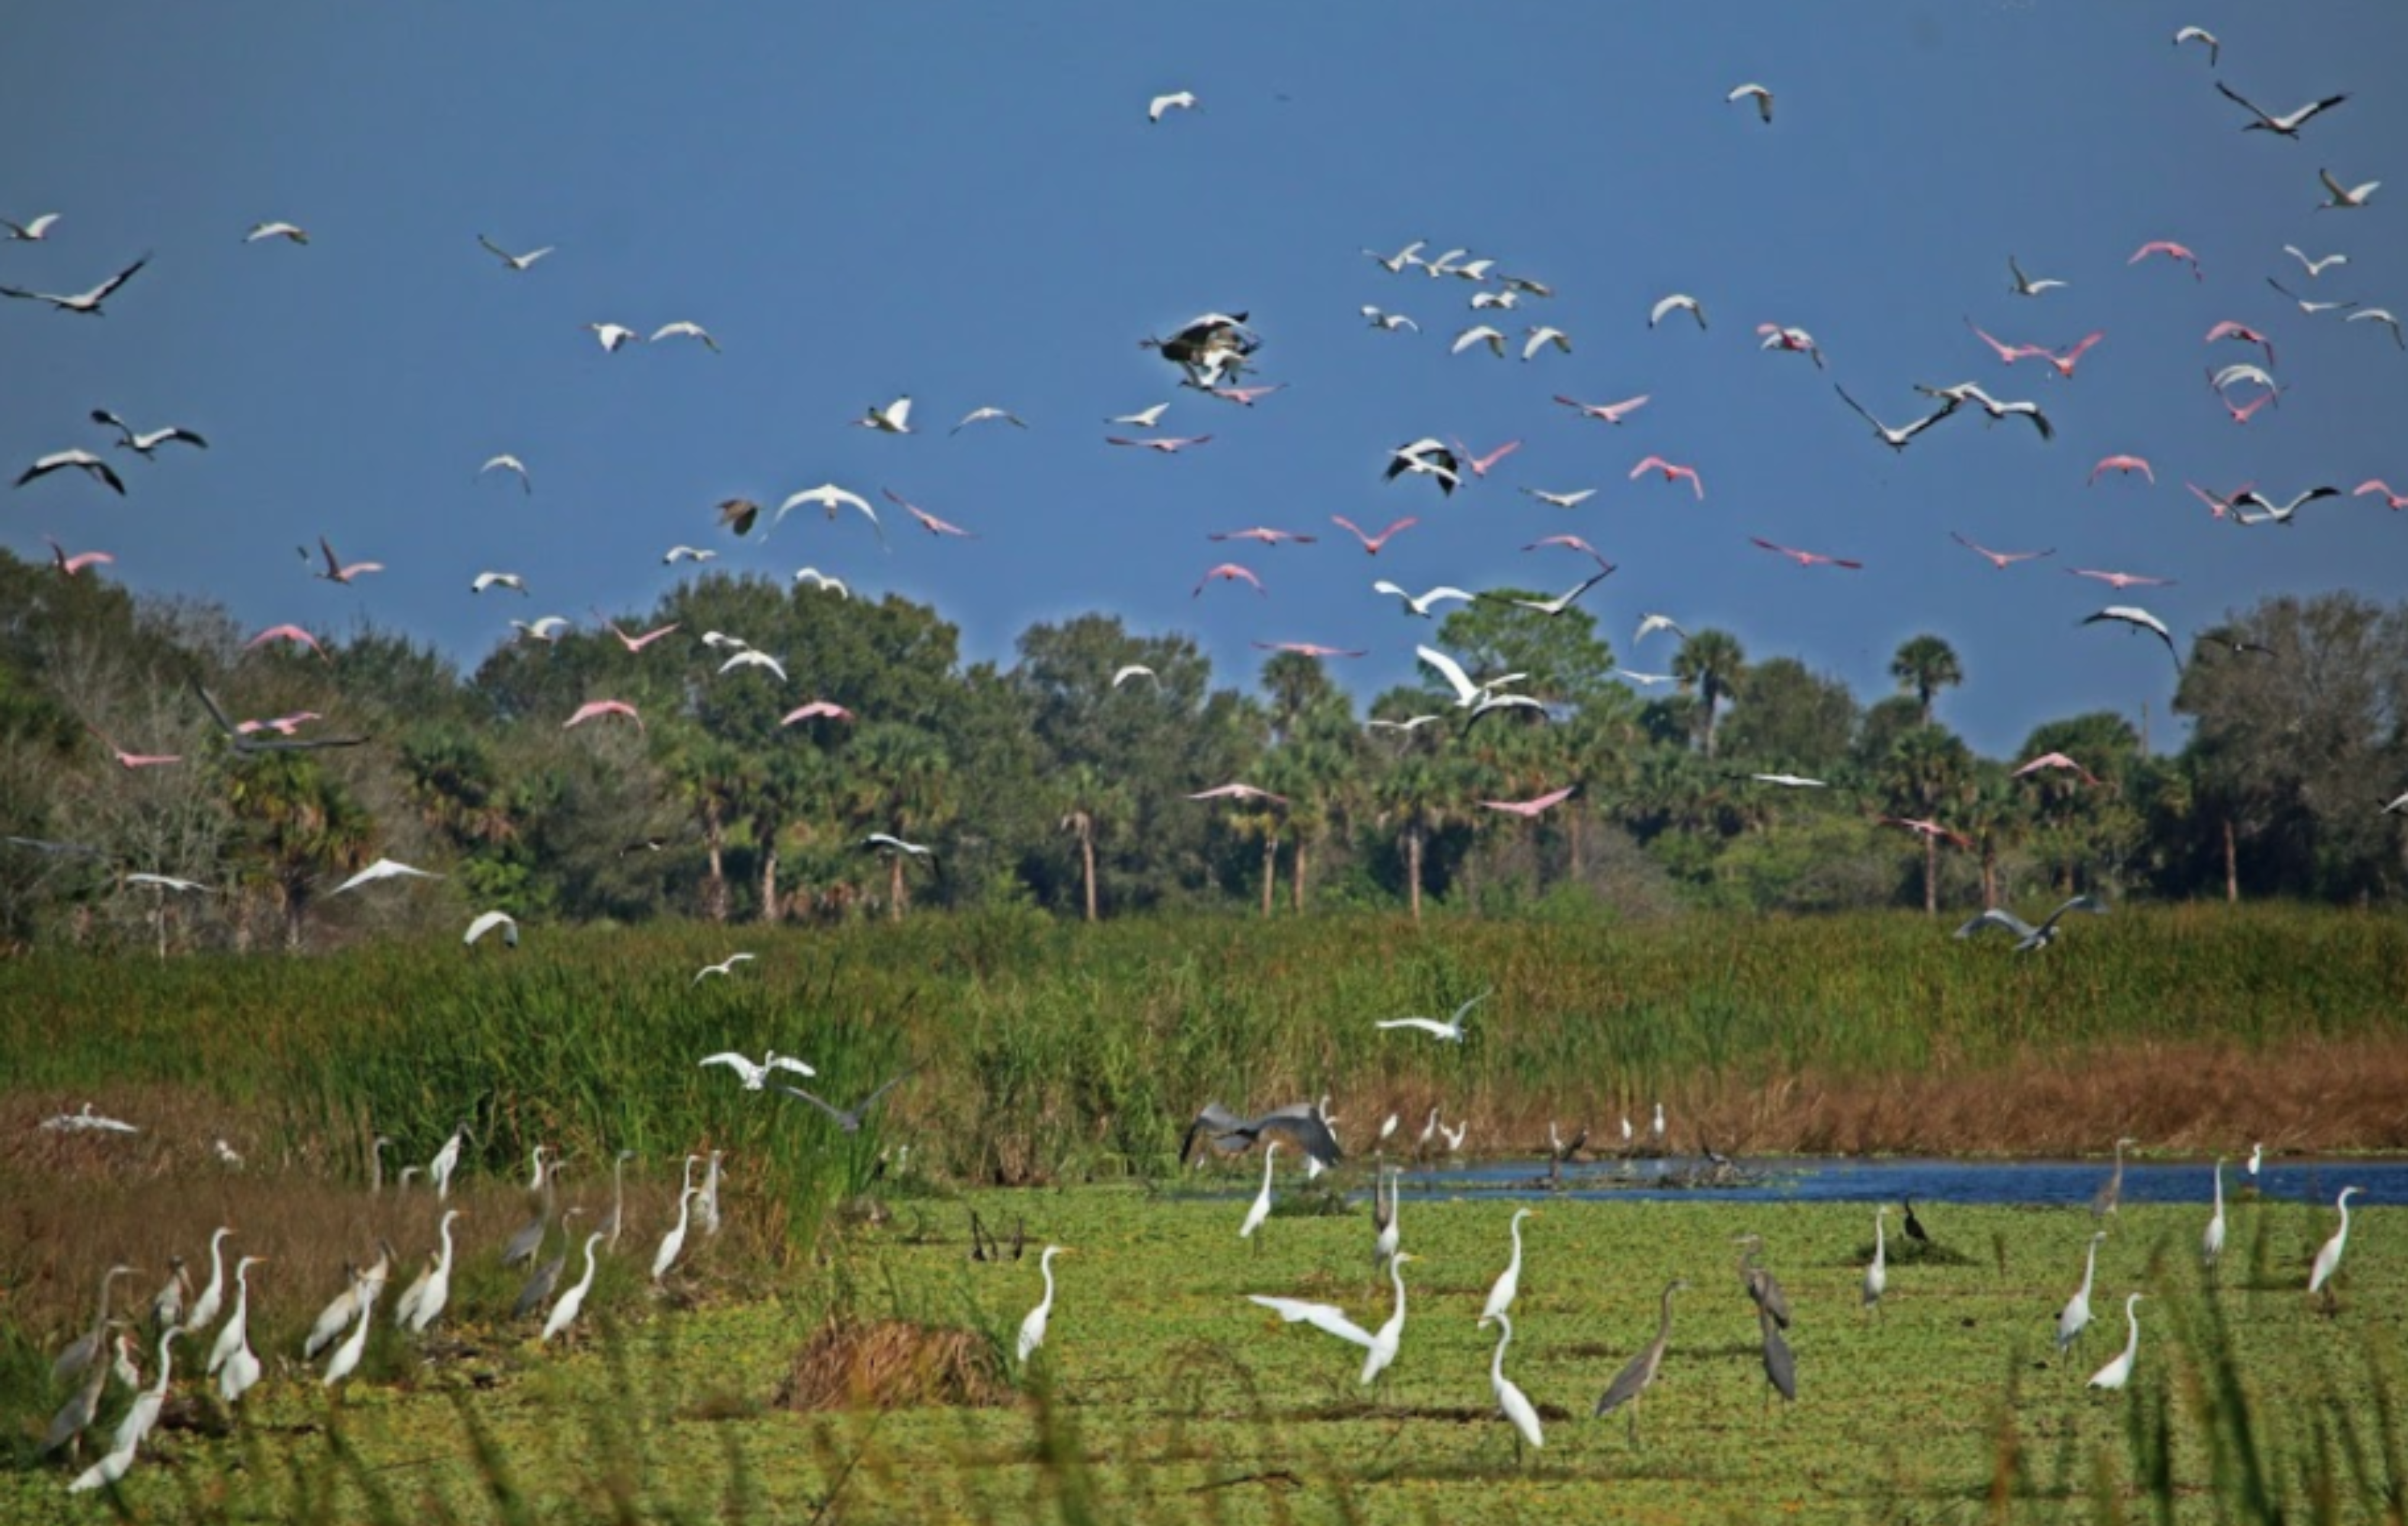 Wading birds in flight over a wetland.